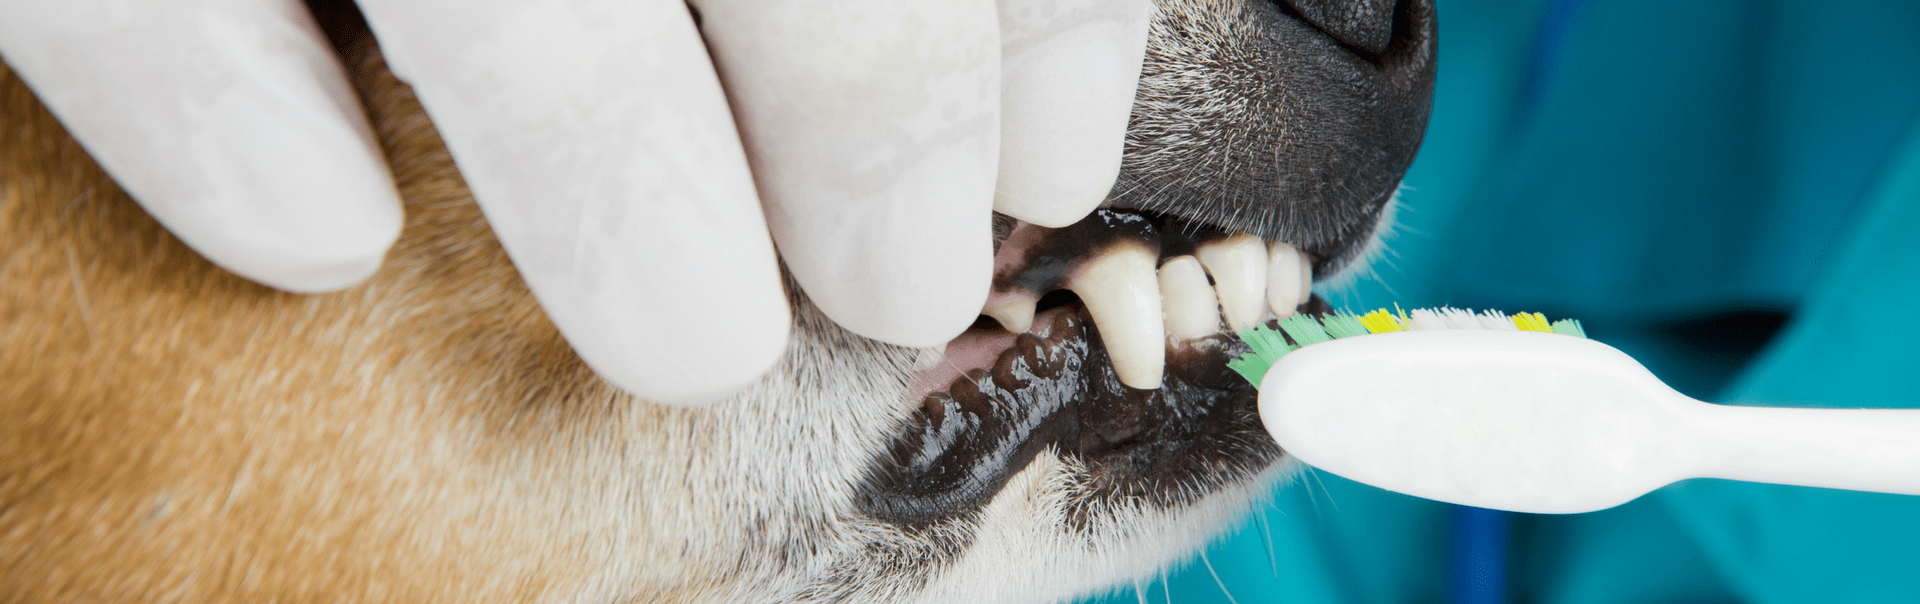 Vet brushing dog's teeth